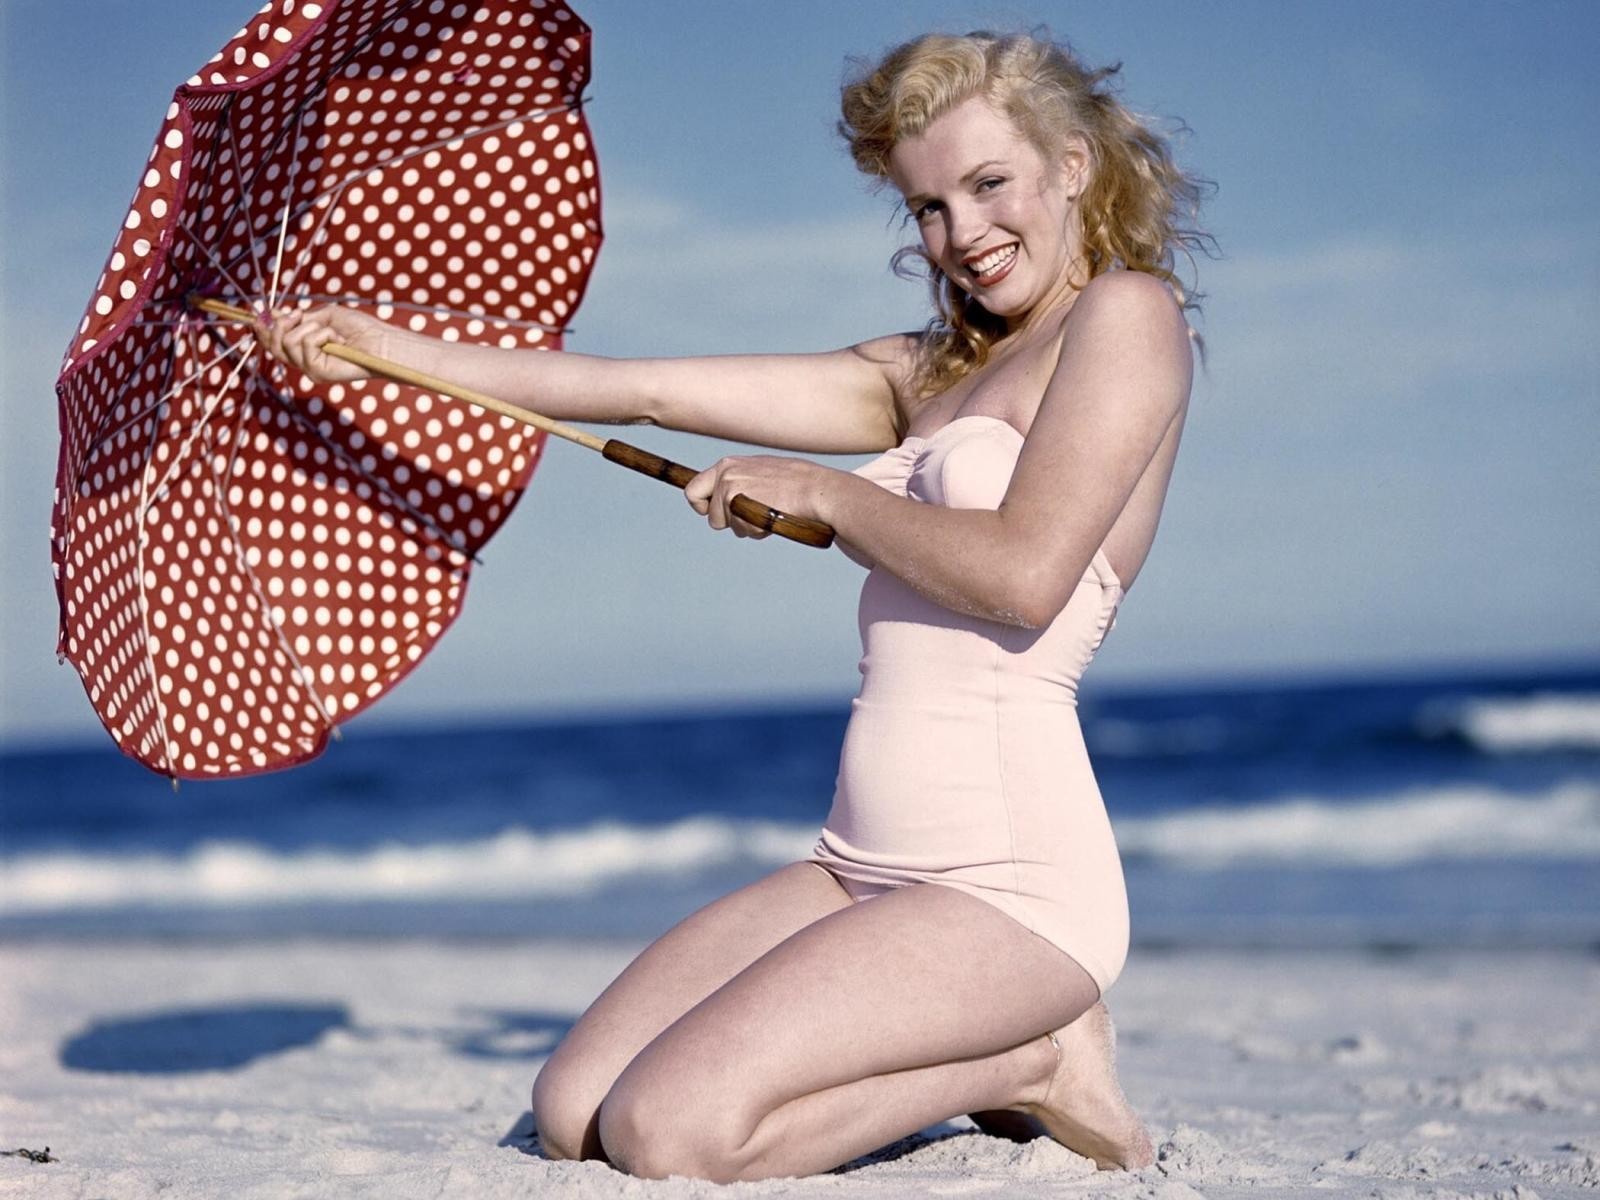 Мэрилин Монро на пляже (фотография 1953 года)